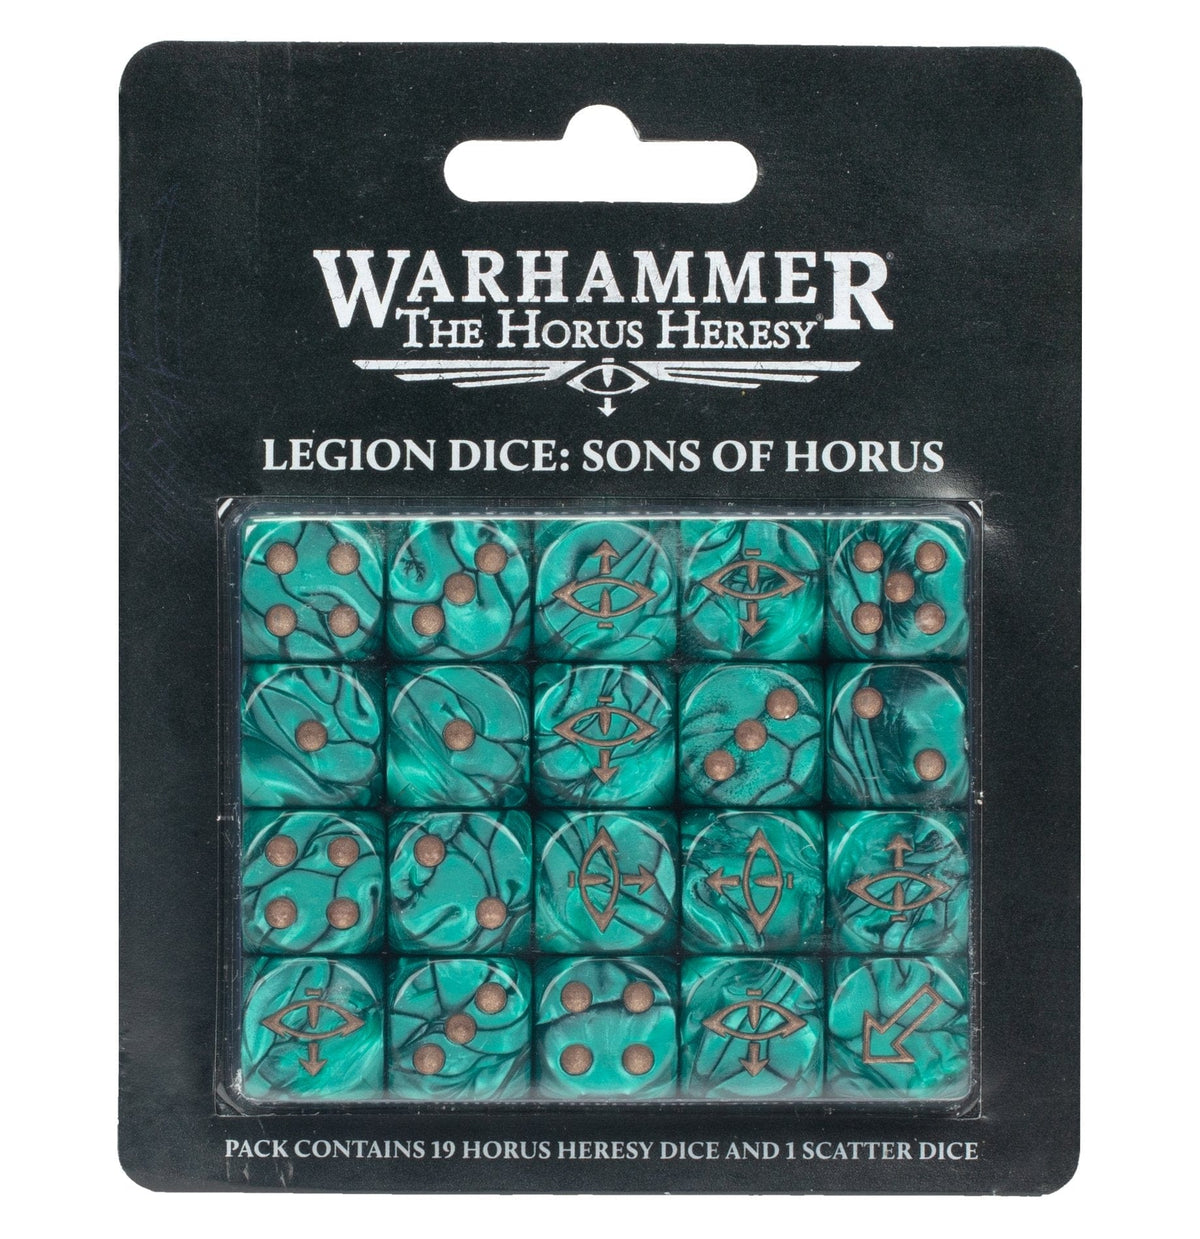 Warhammer - Horus Heresy: Sons of Horus - Legion Dice - Third Eye